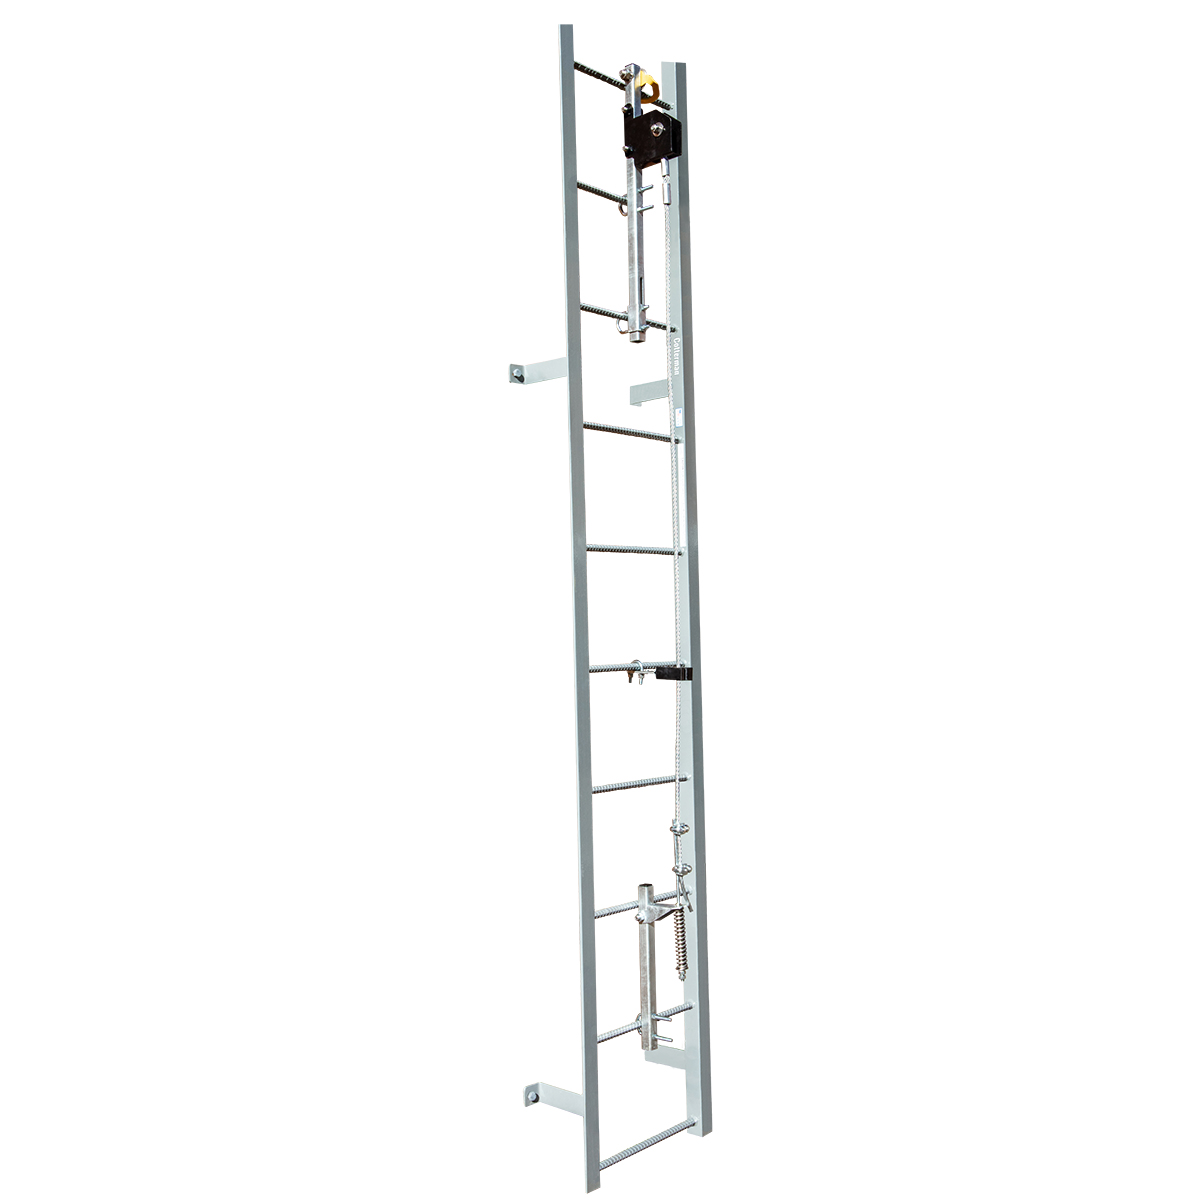 SafeWaze 20' VLL Cable Ladder System, 2-person Complete Kit